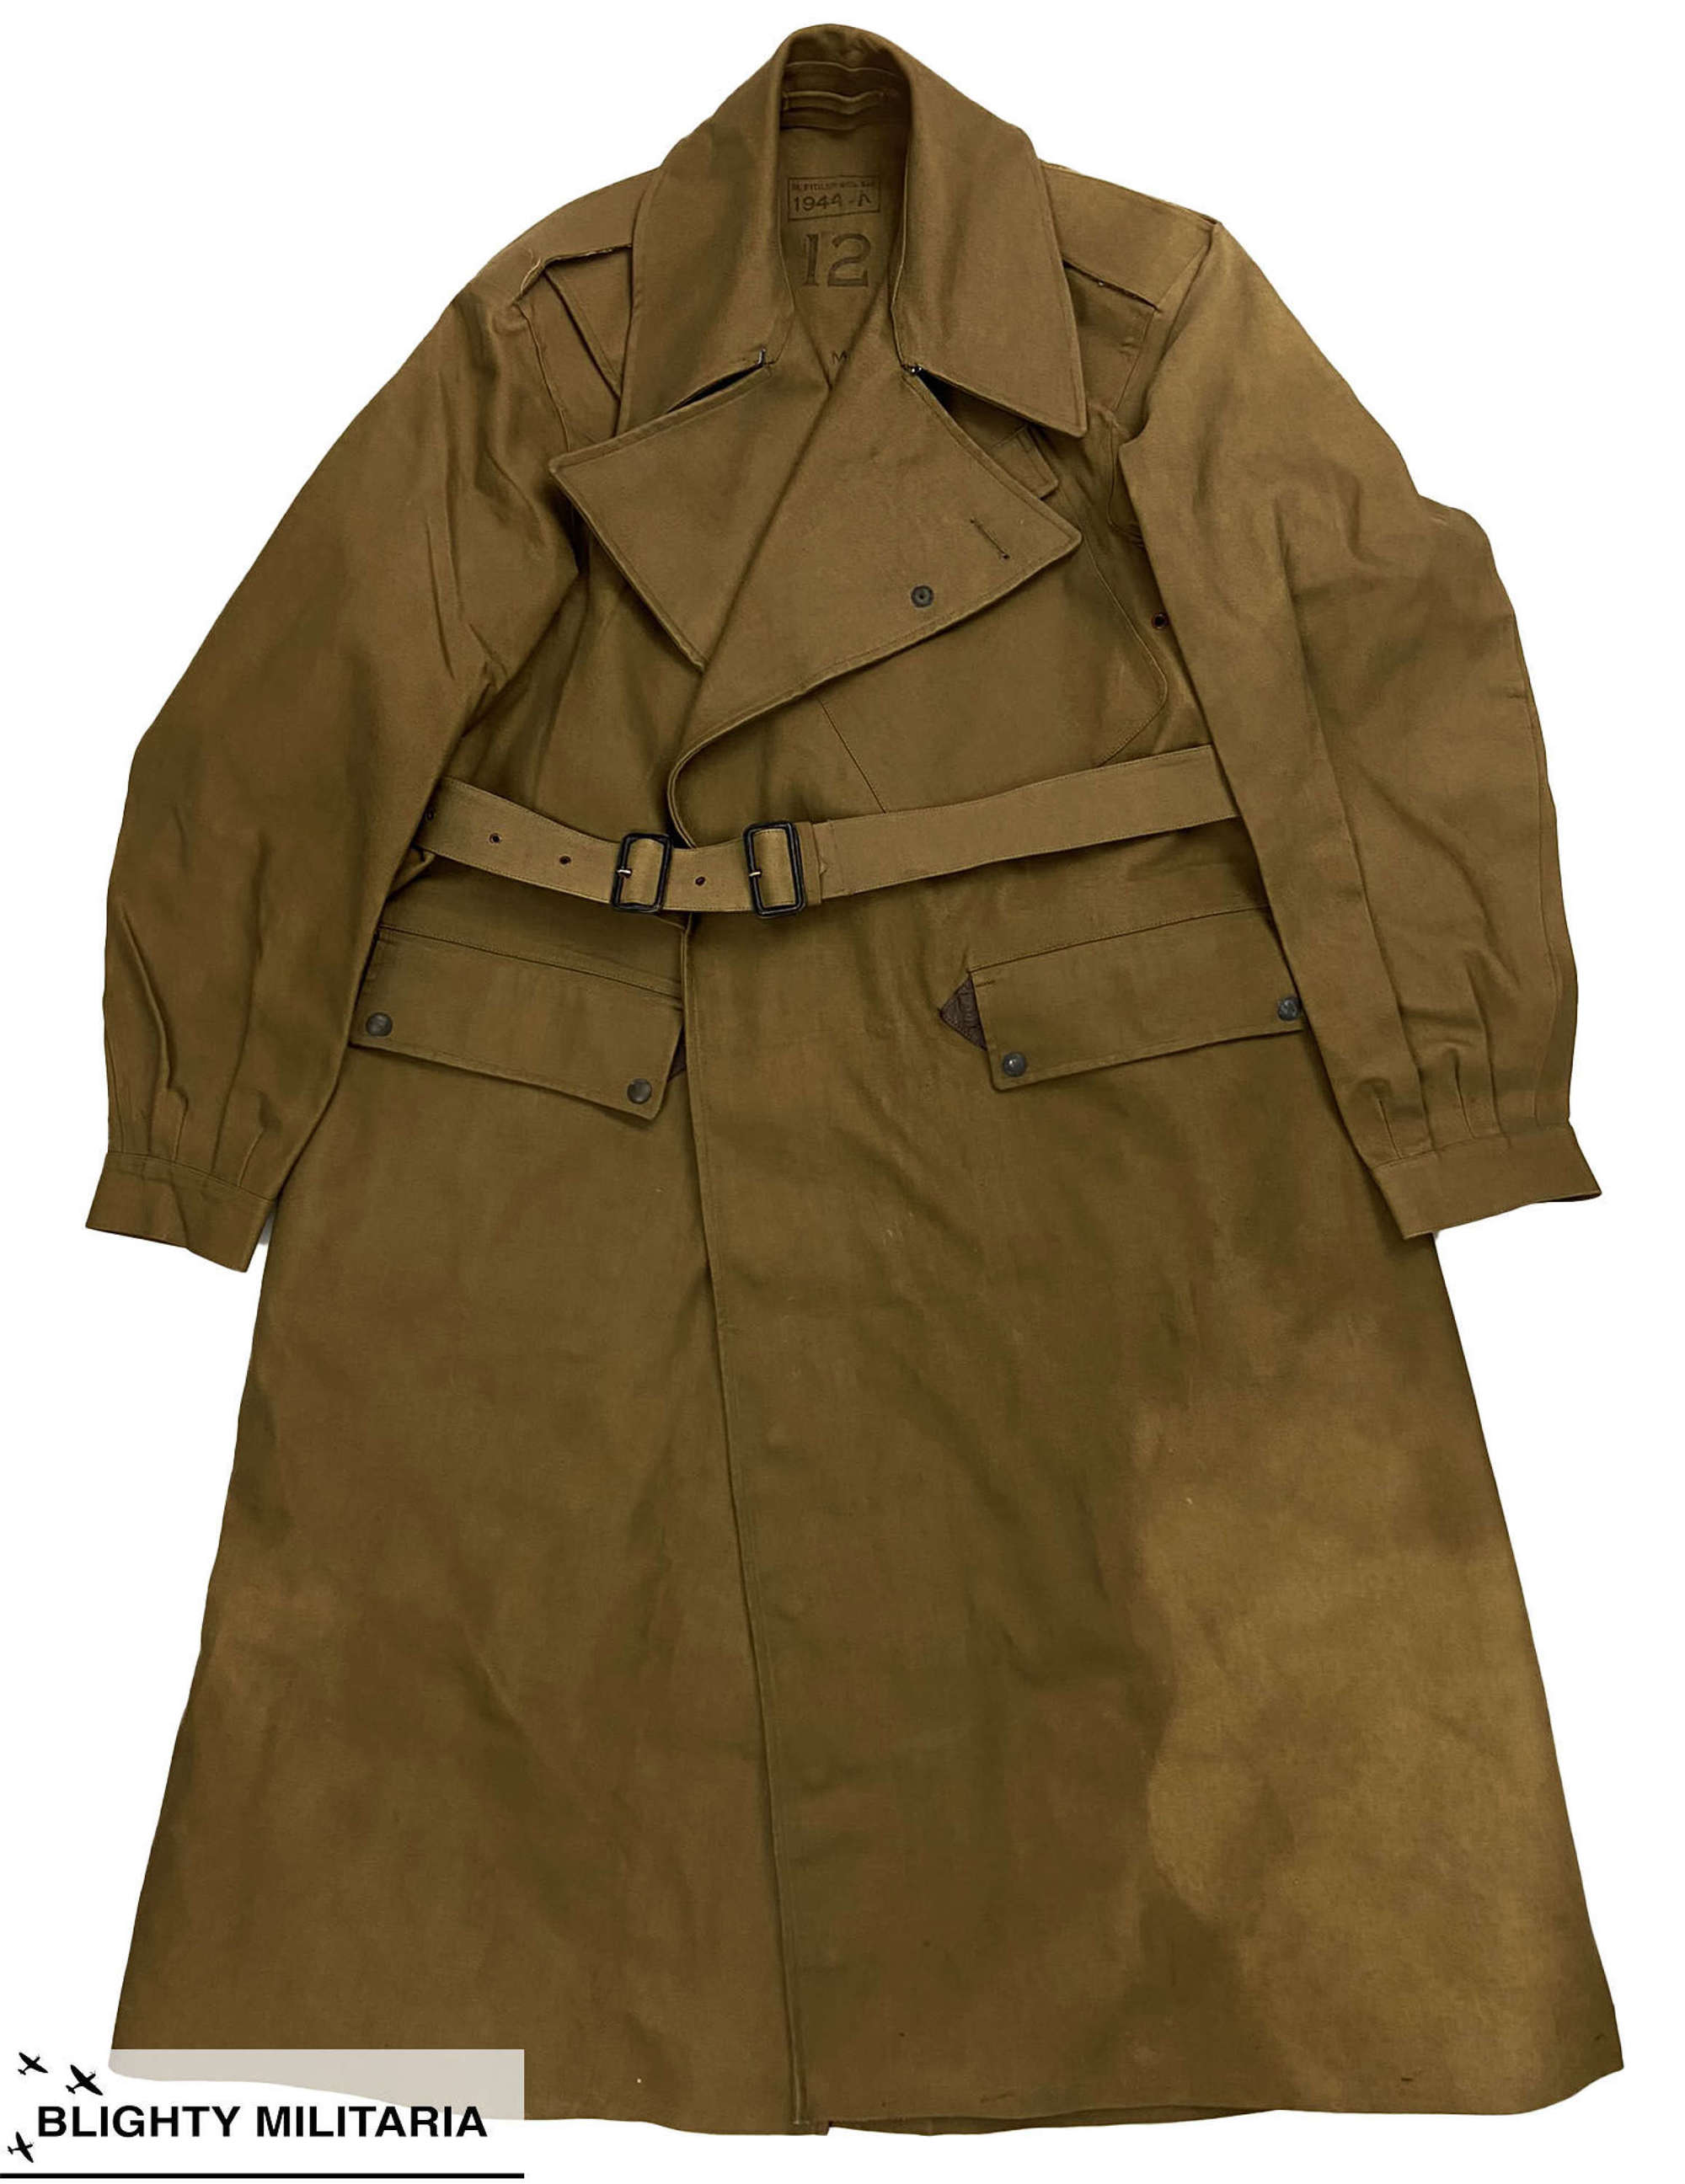 Original 1944 Dated British Army Dispatch Rider's Coat - Size 12